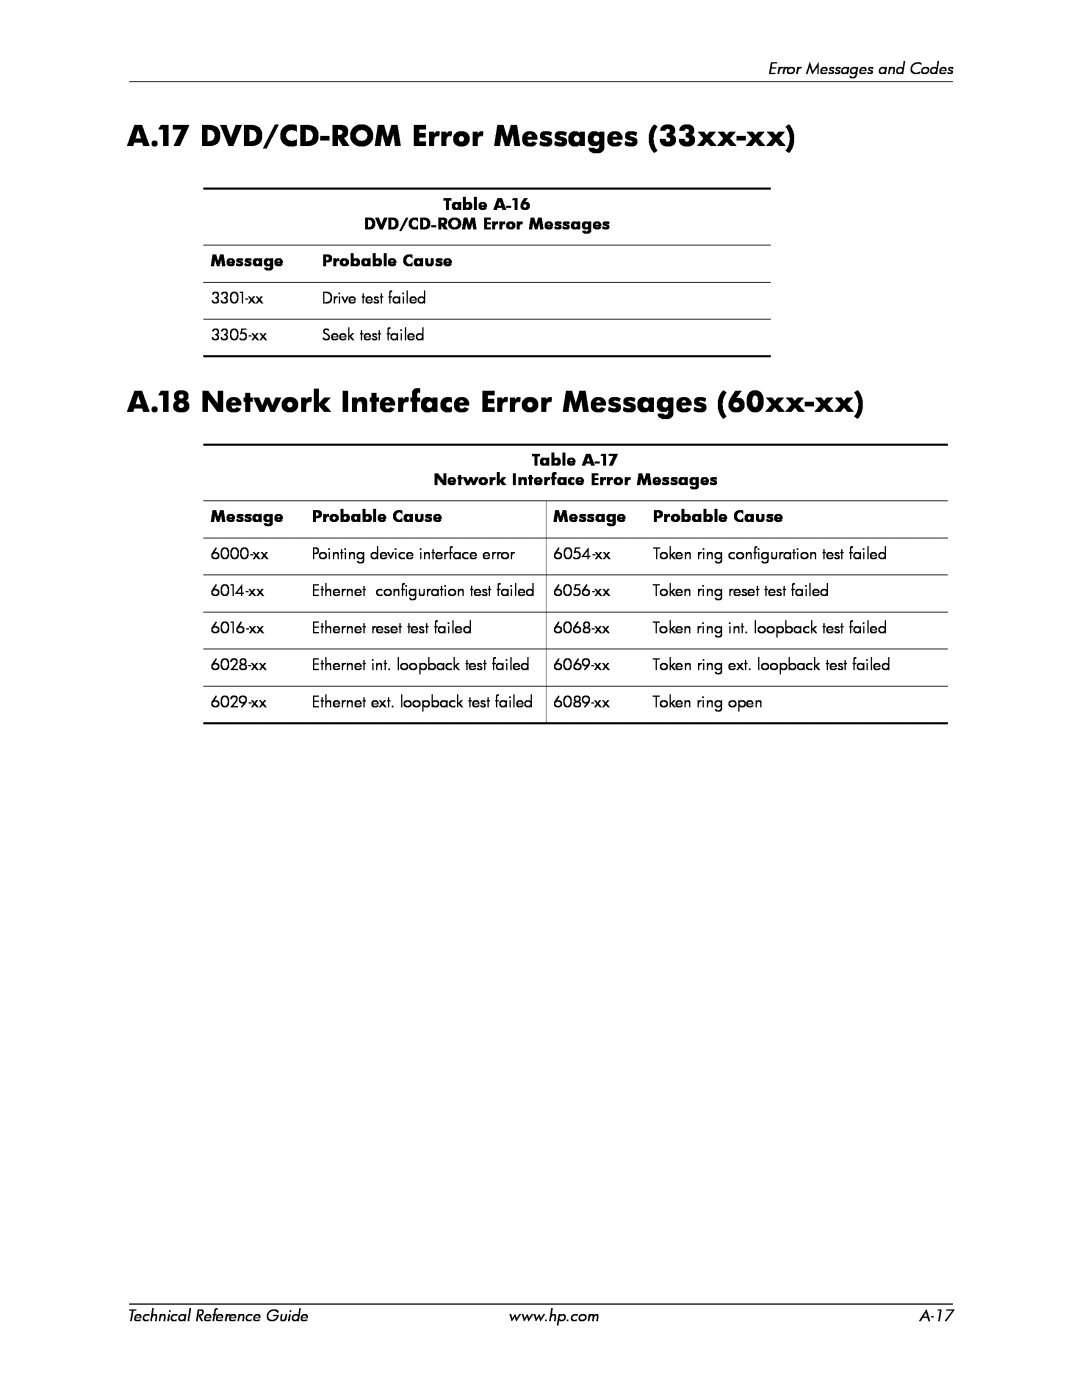 HP 8000 tower manual A.17 DVD/CD-ROM Error Messages, A.18 Network Interface Error Messages 